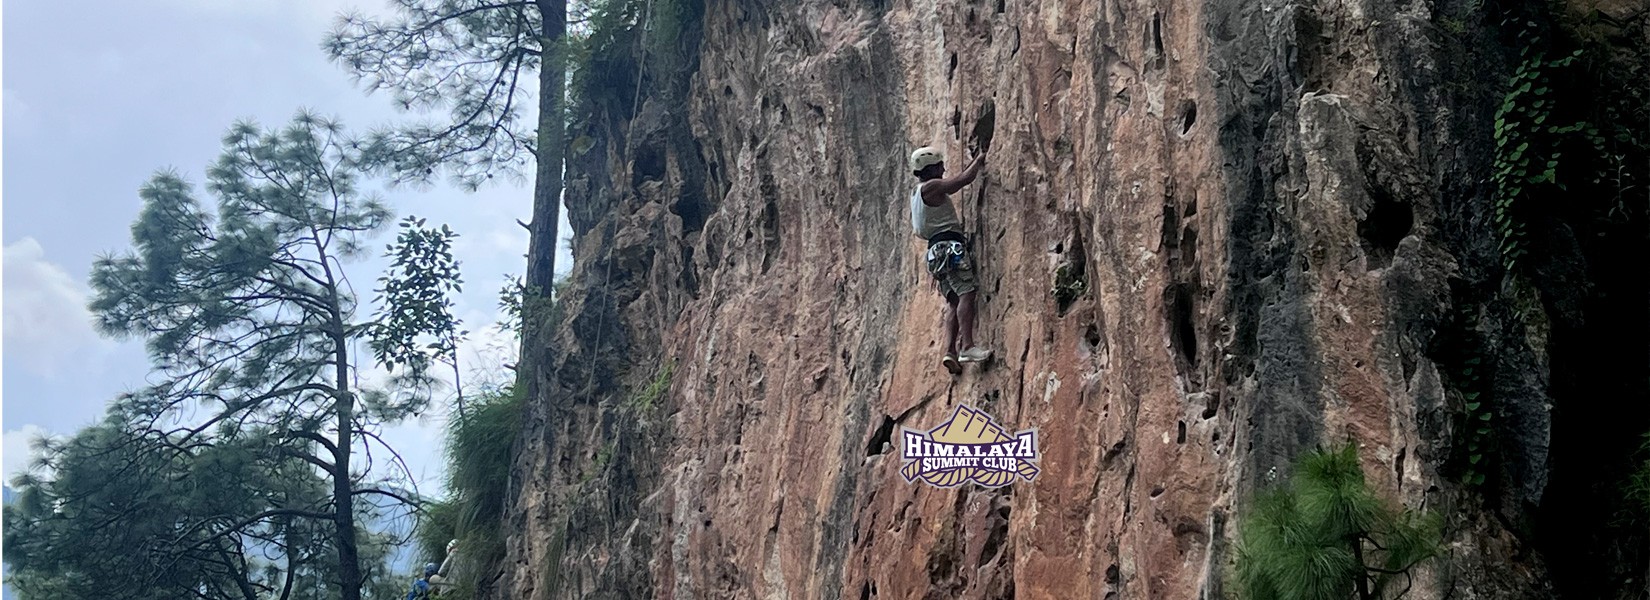 Rock Climbing In Nepal